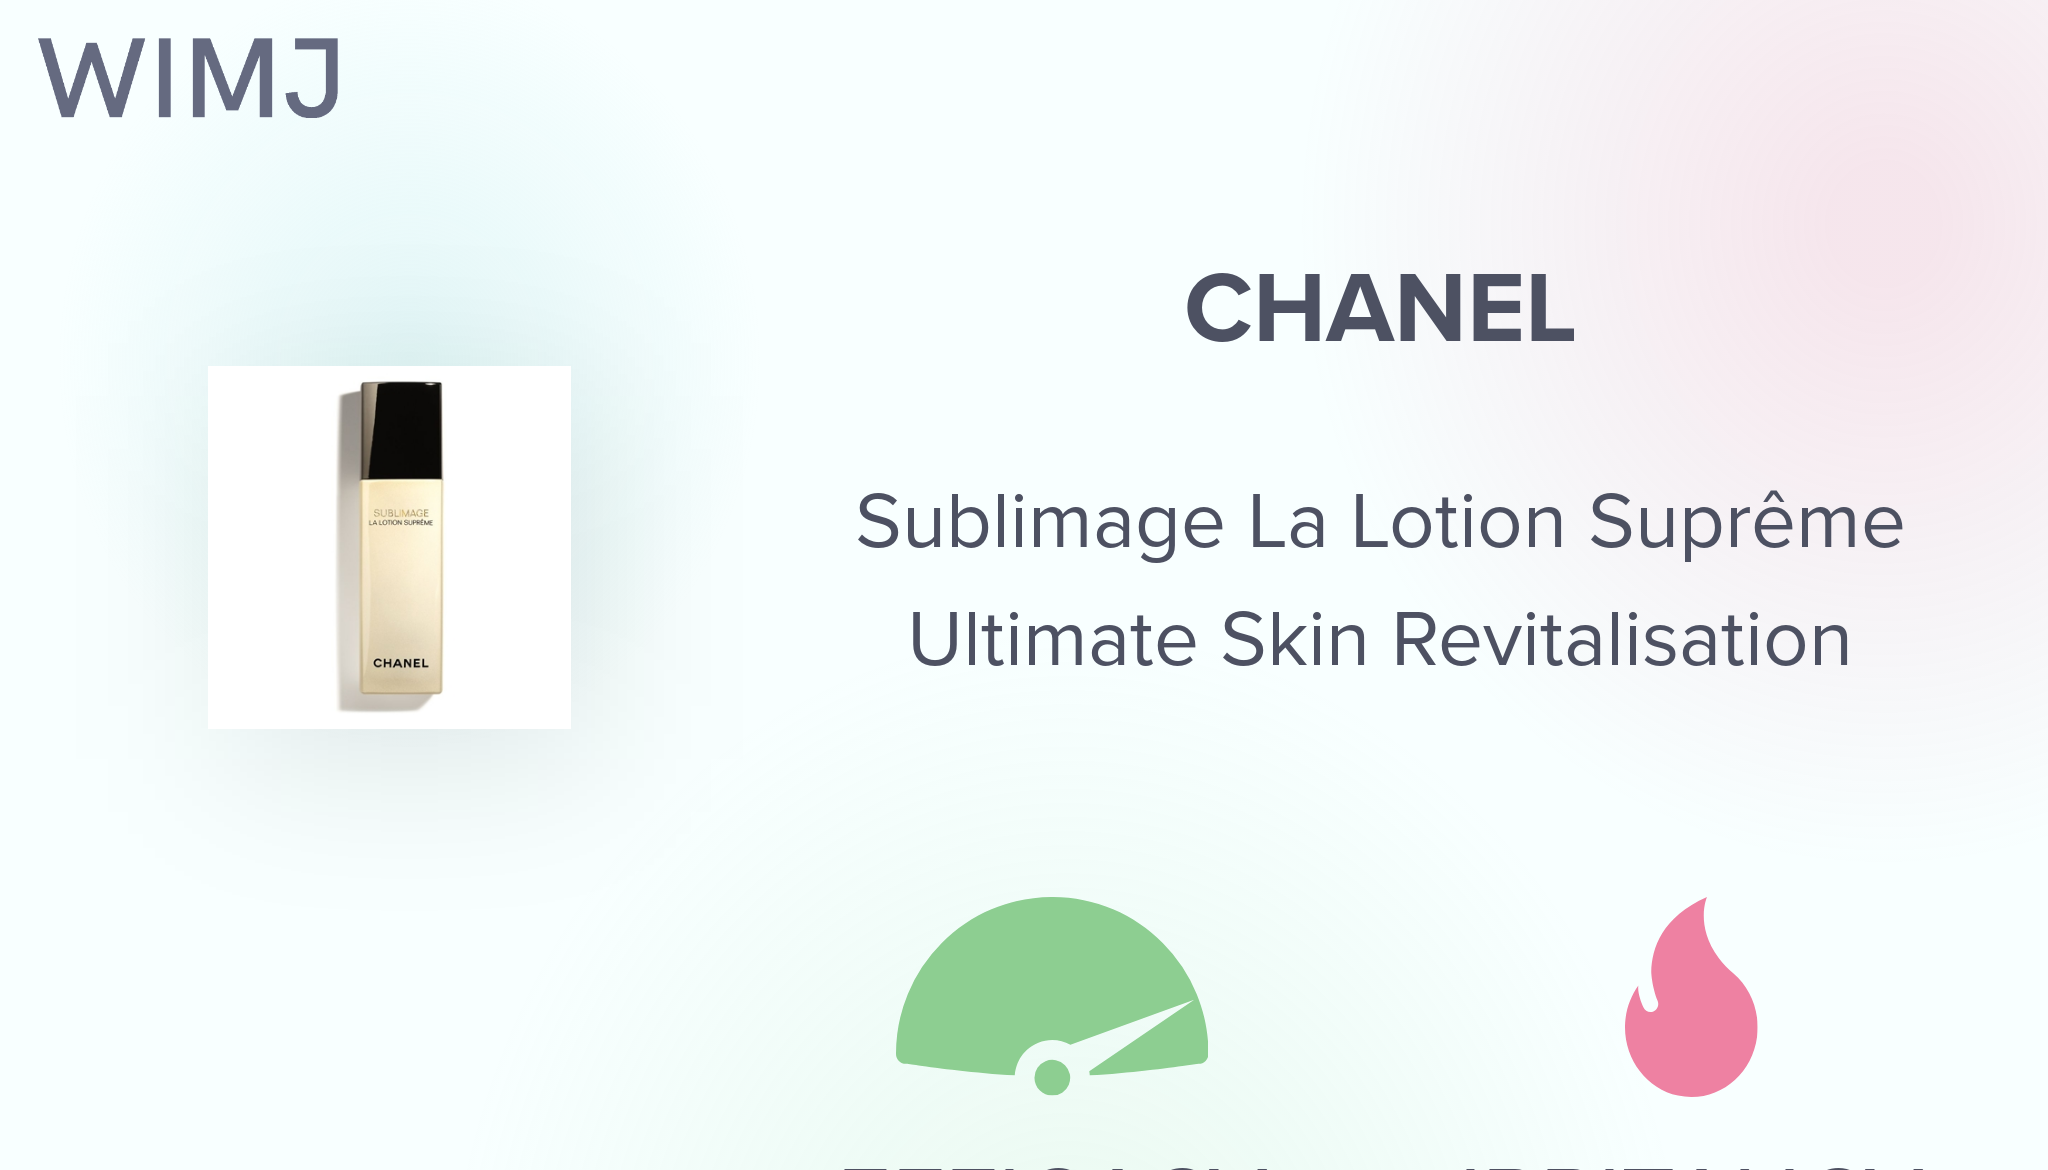 Review: CHANEL - Sublimage La Lotion Suprême Ultimate Skin Revitalisation -  WIMJ